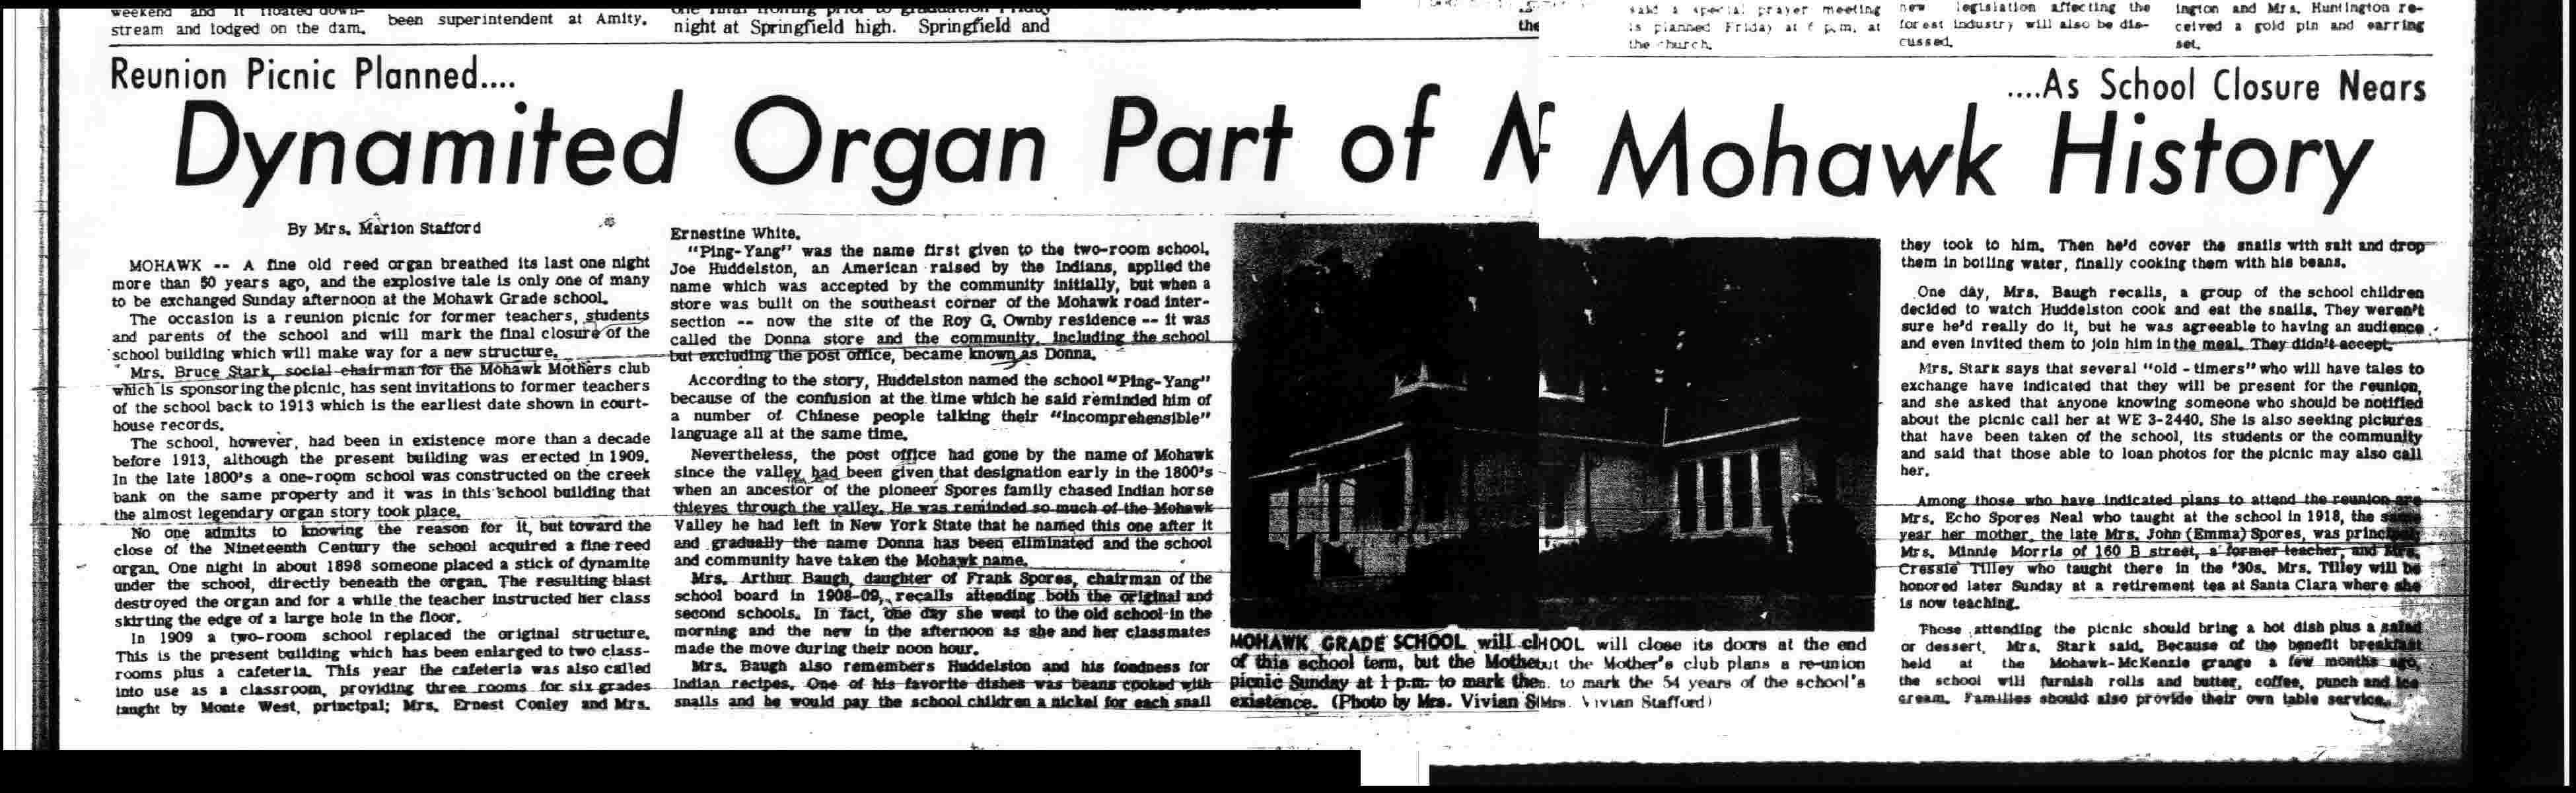 1963 Springfield News - Mohawk School Closes